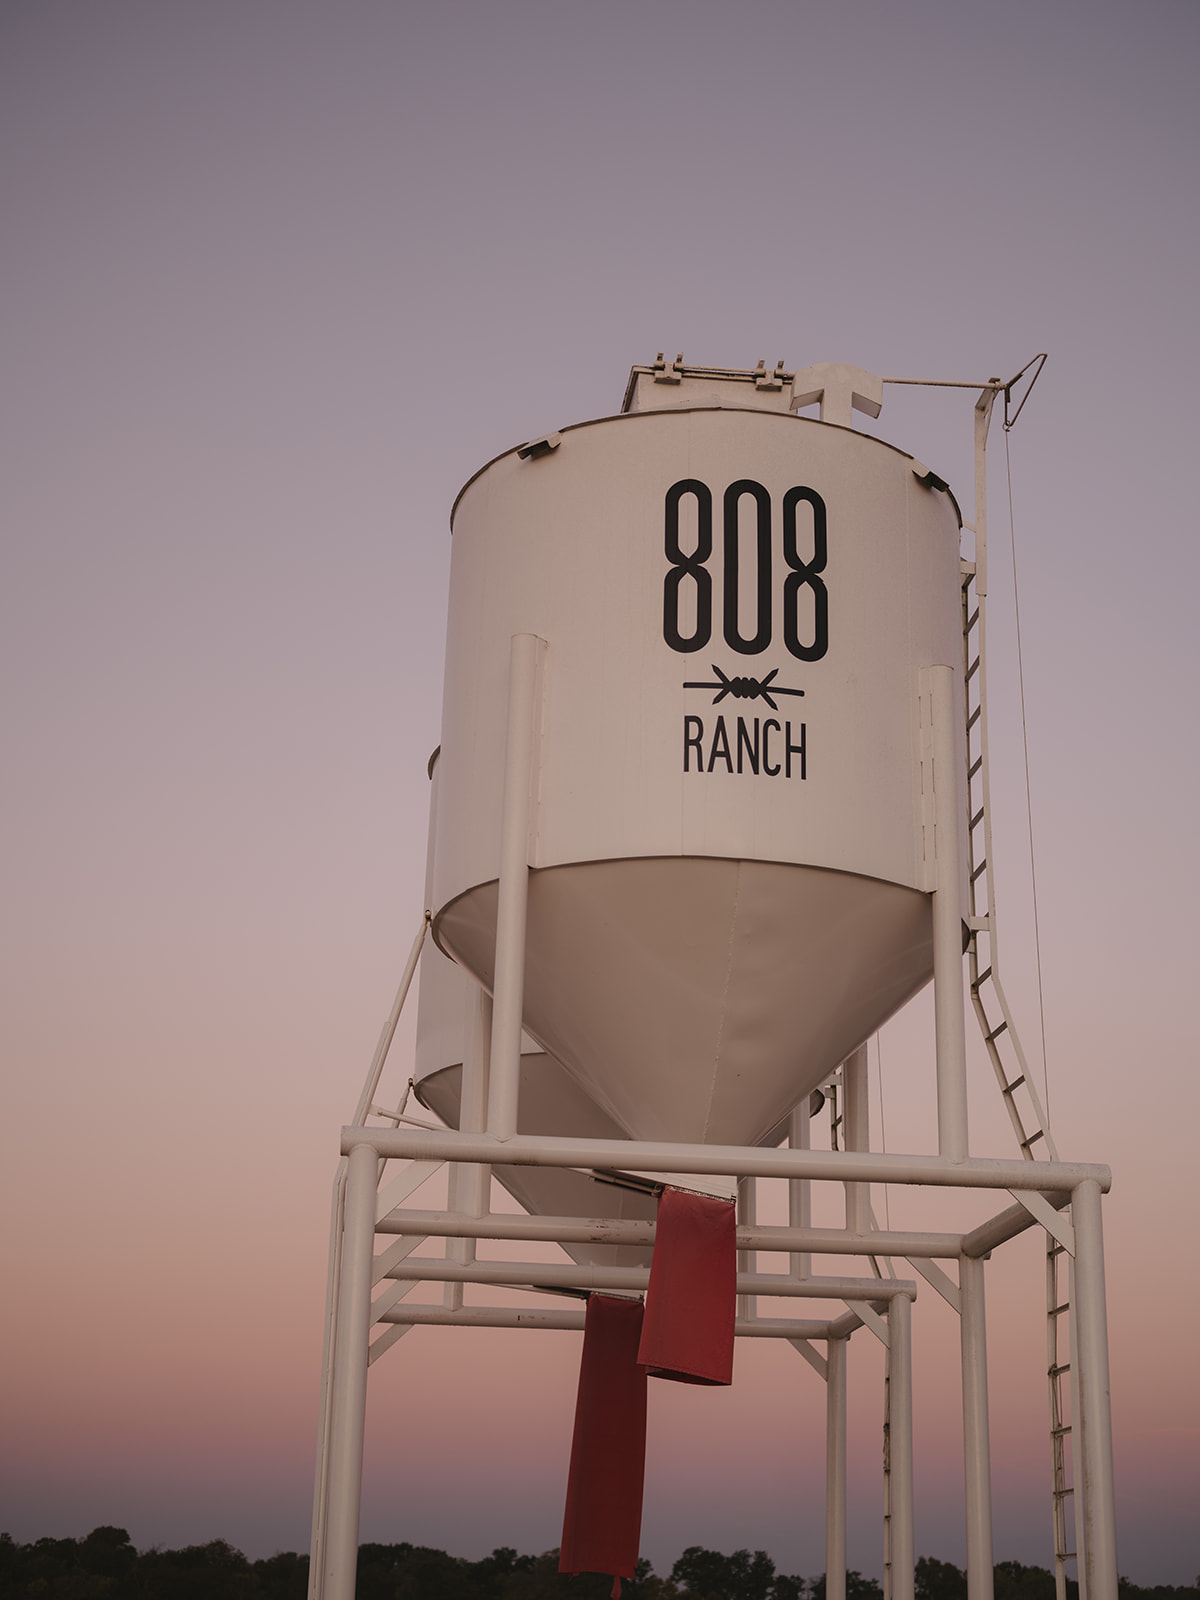 808 ranch near northwest arkansas